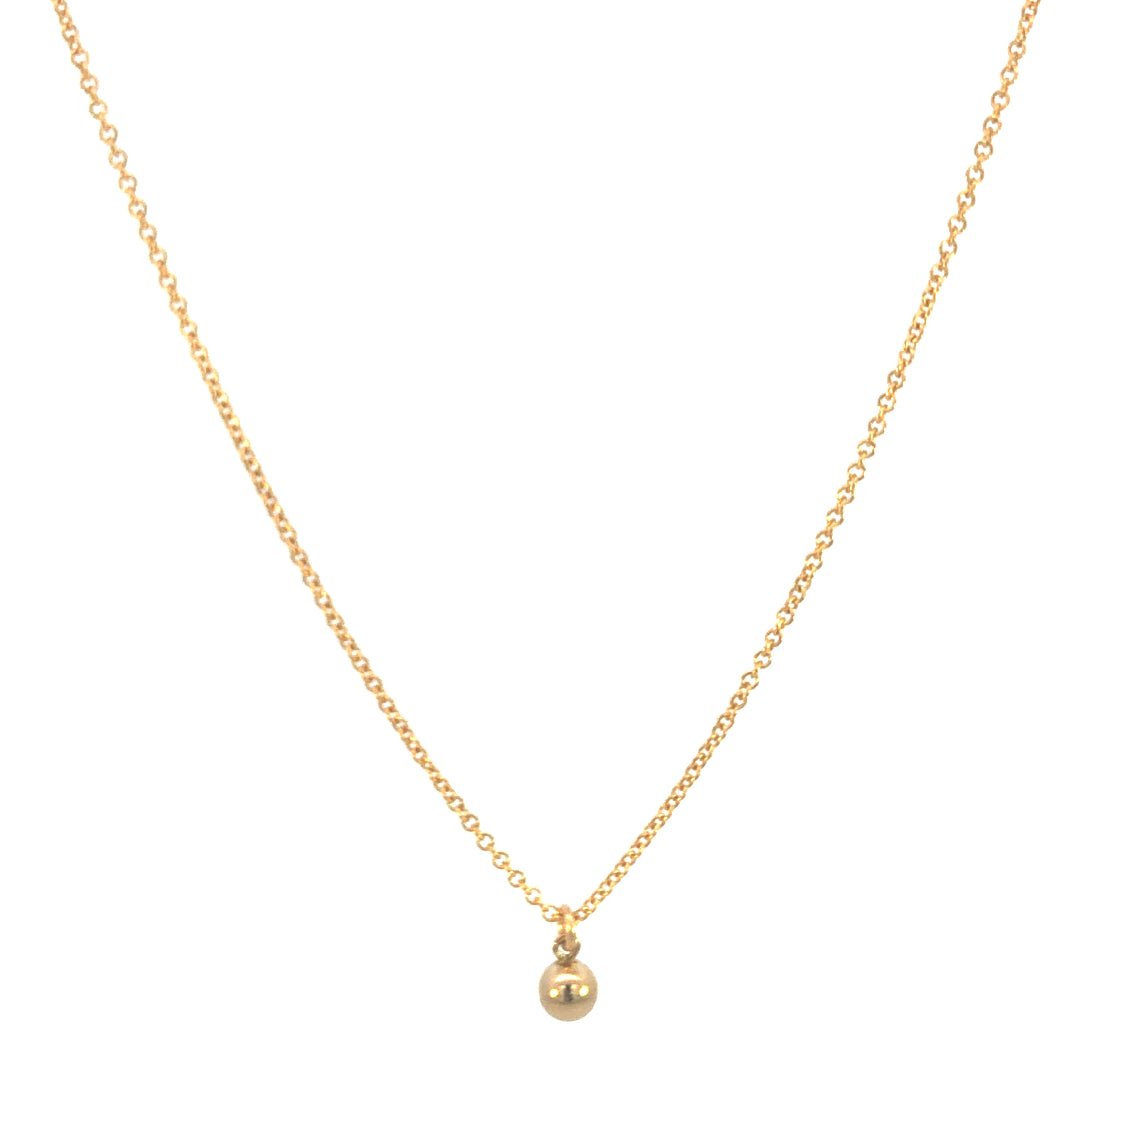 Tiny Gold Drop Necklace - Le Serey